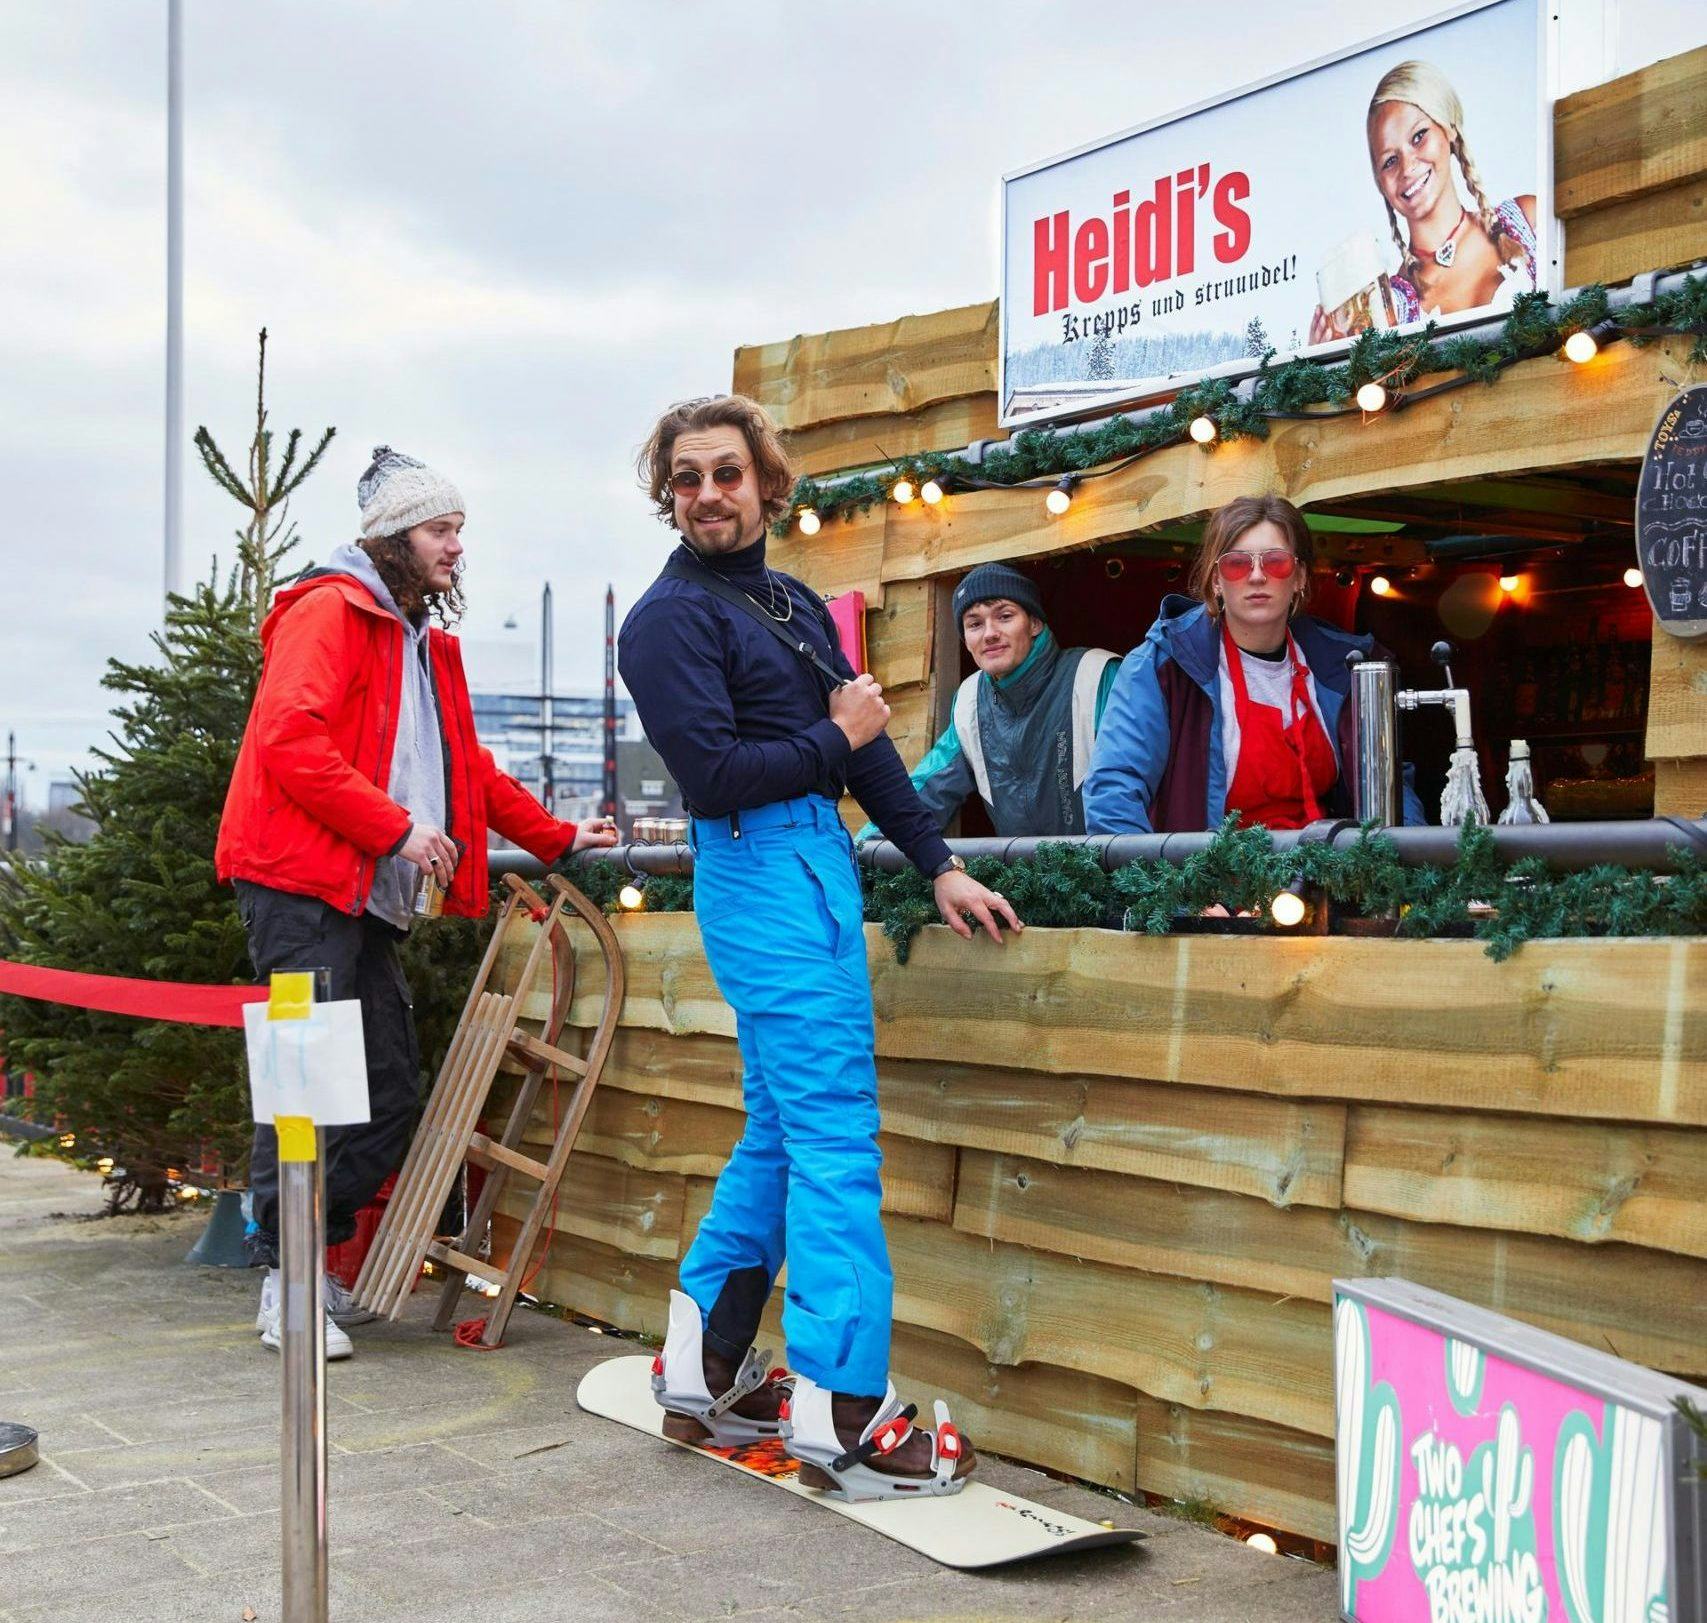 Take-away wintersportbar Heidi's geopend